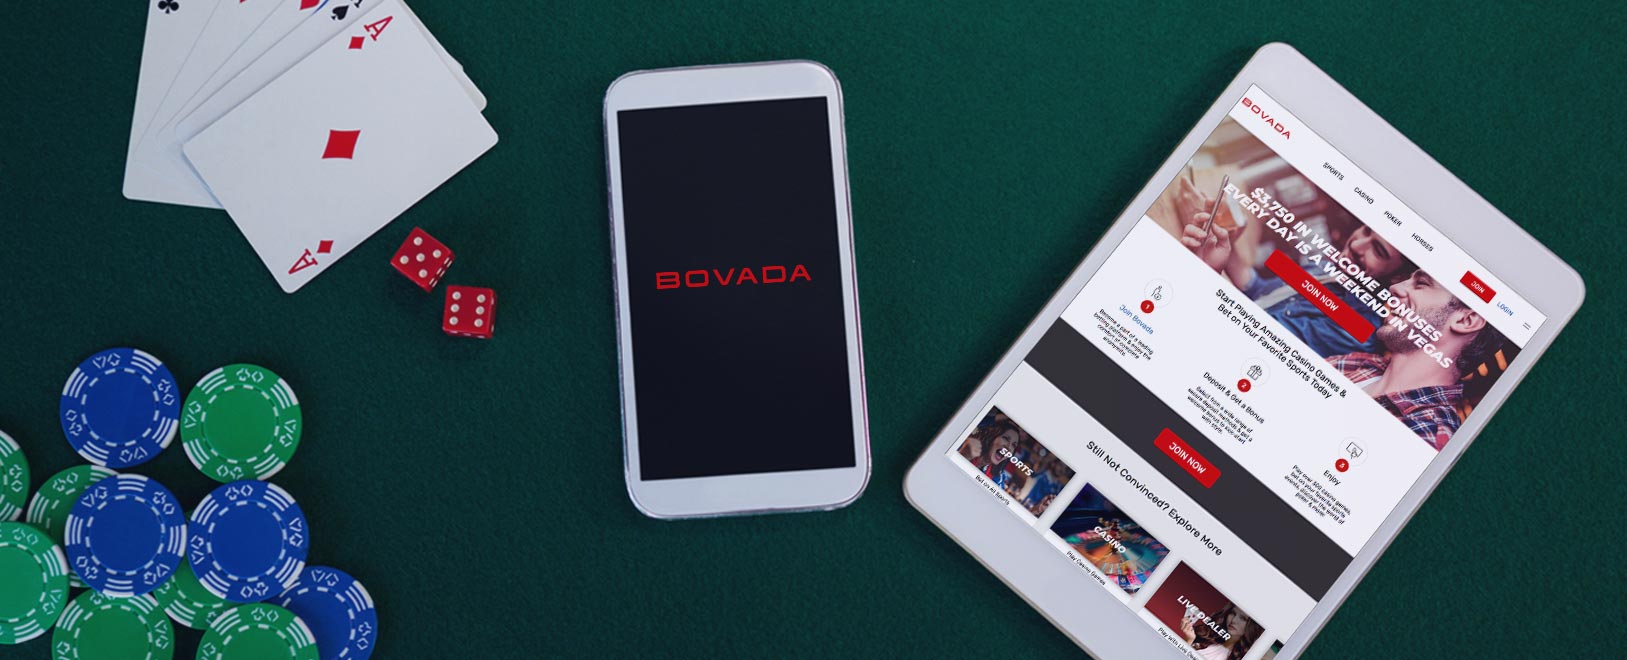 Bovada Casino Mobile App Download